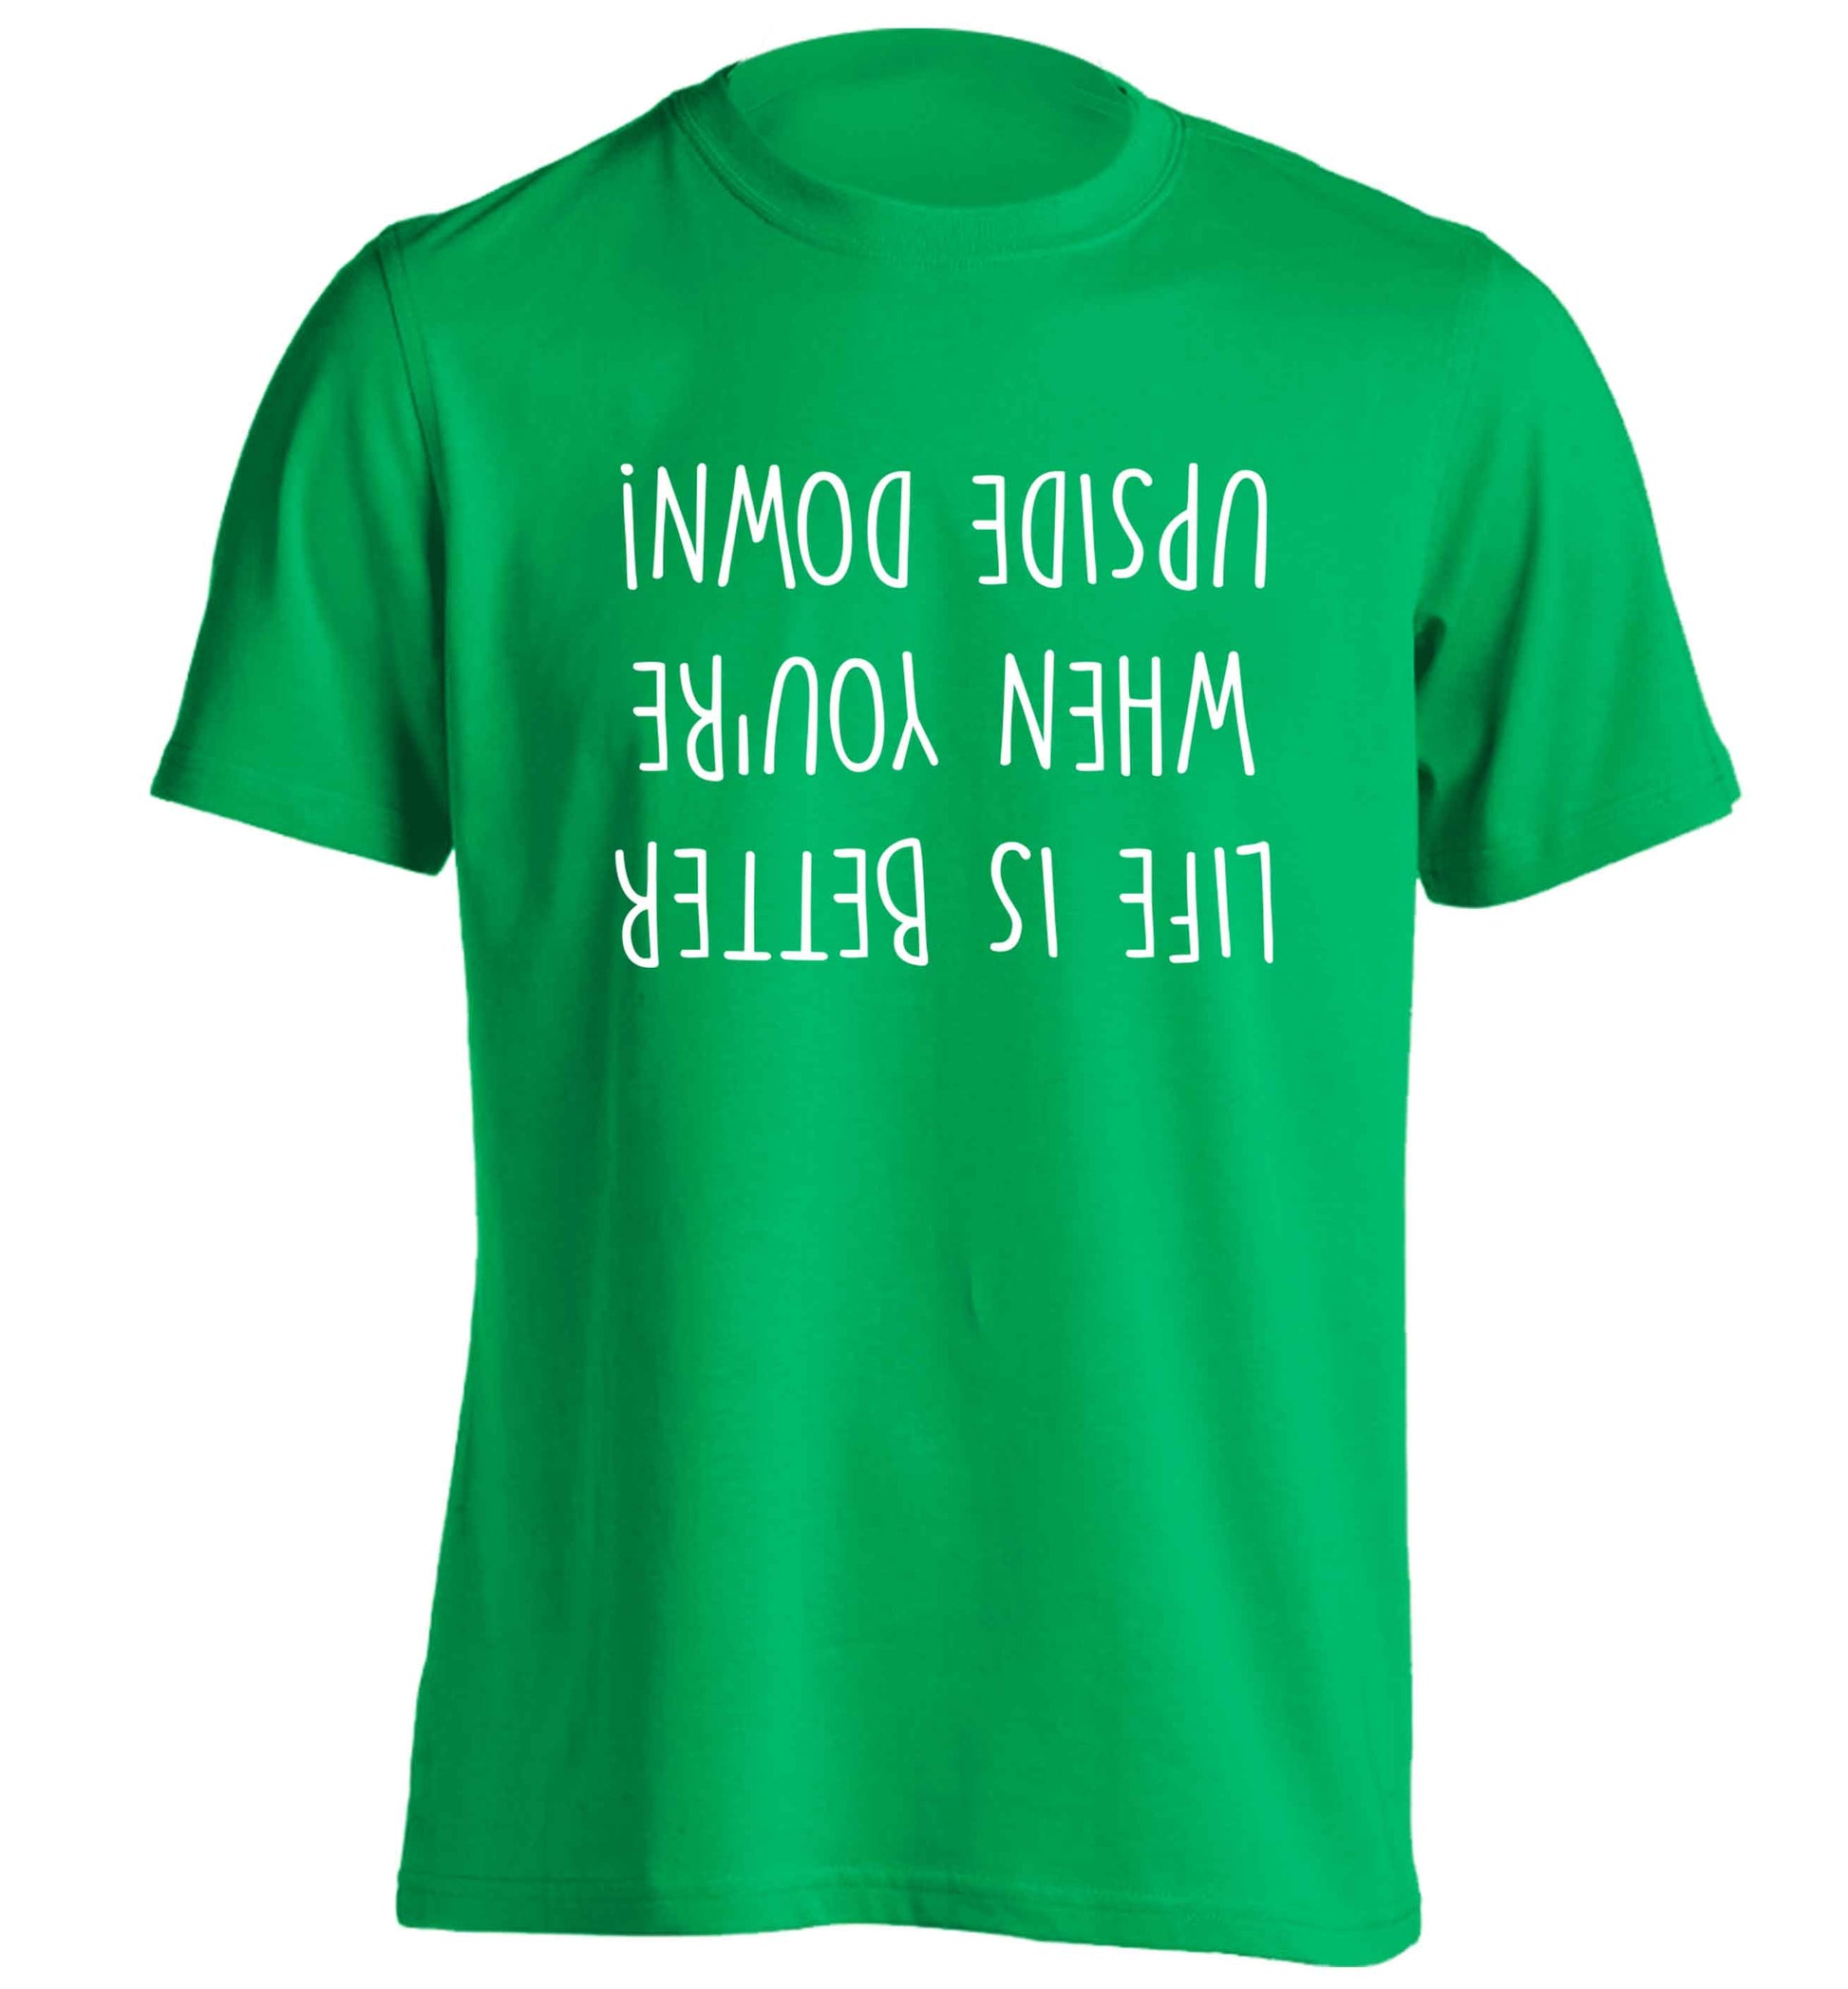 Life is better upside down adults unisex green Tshirt 2XL